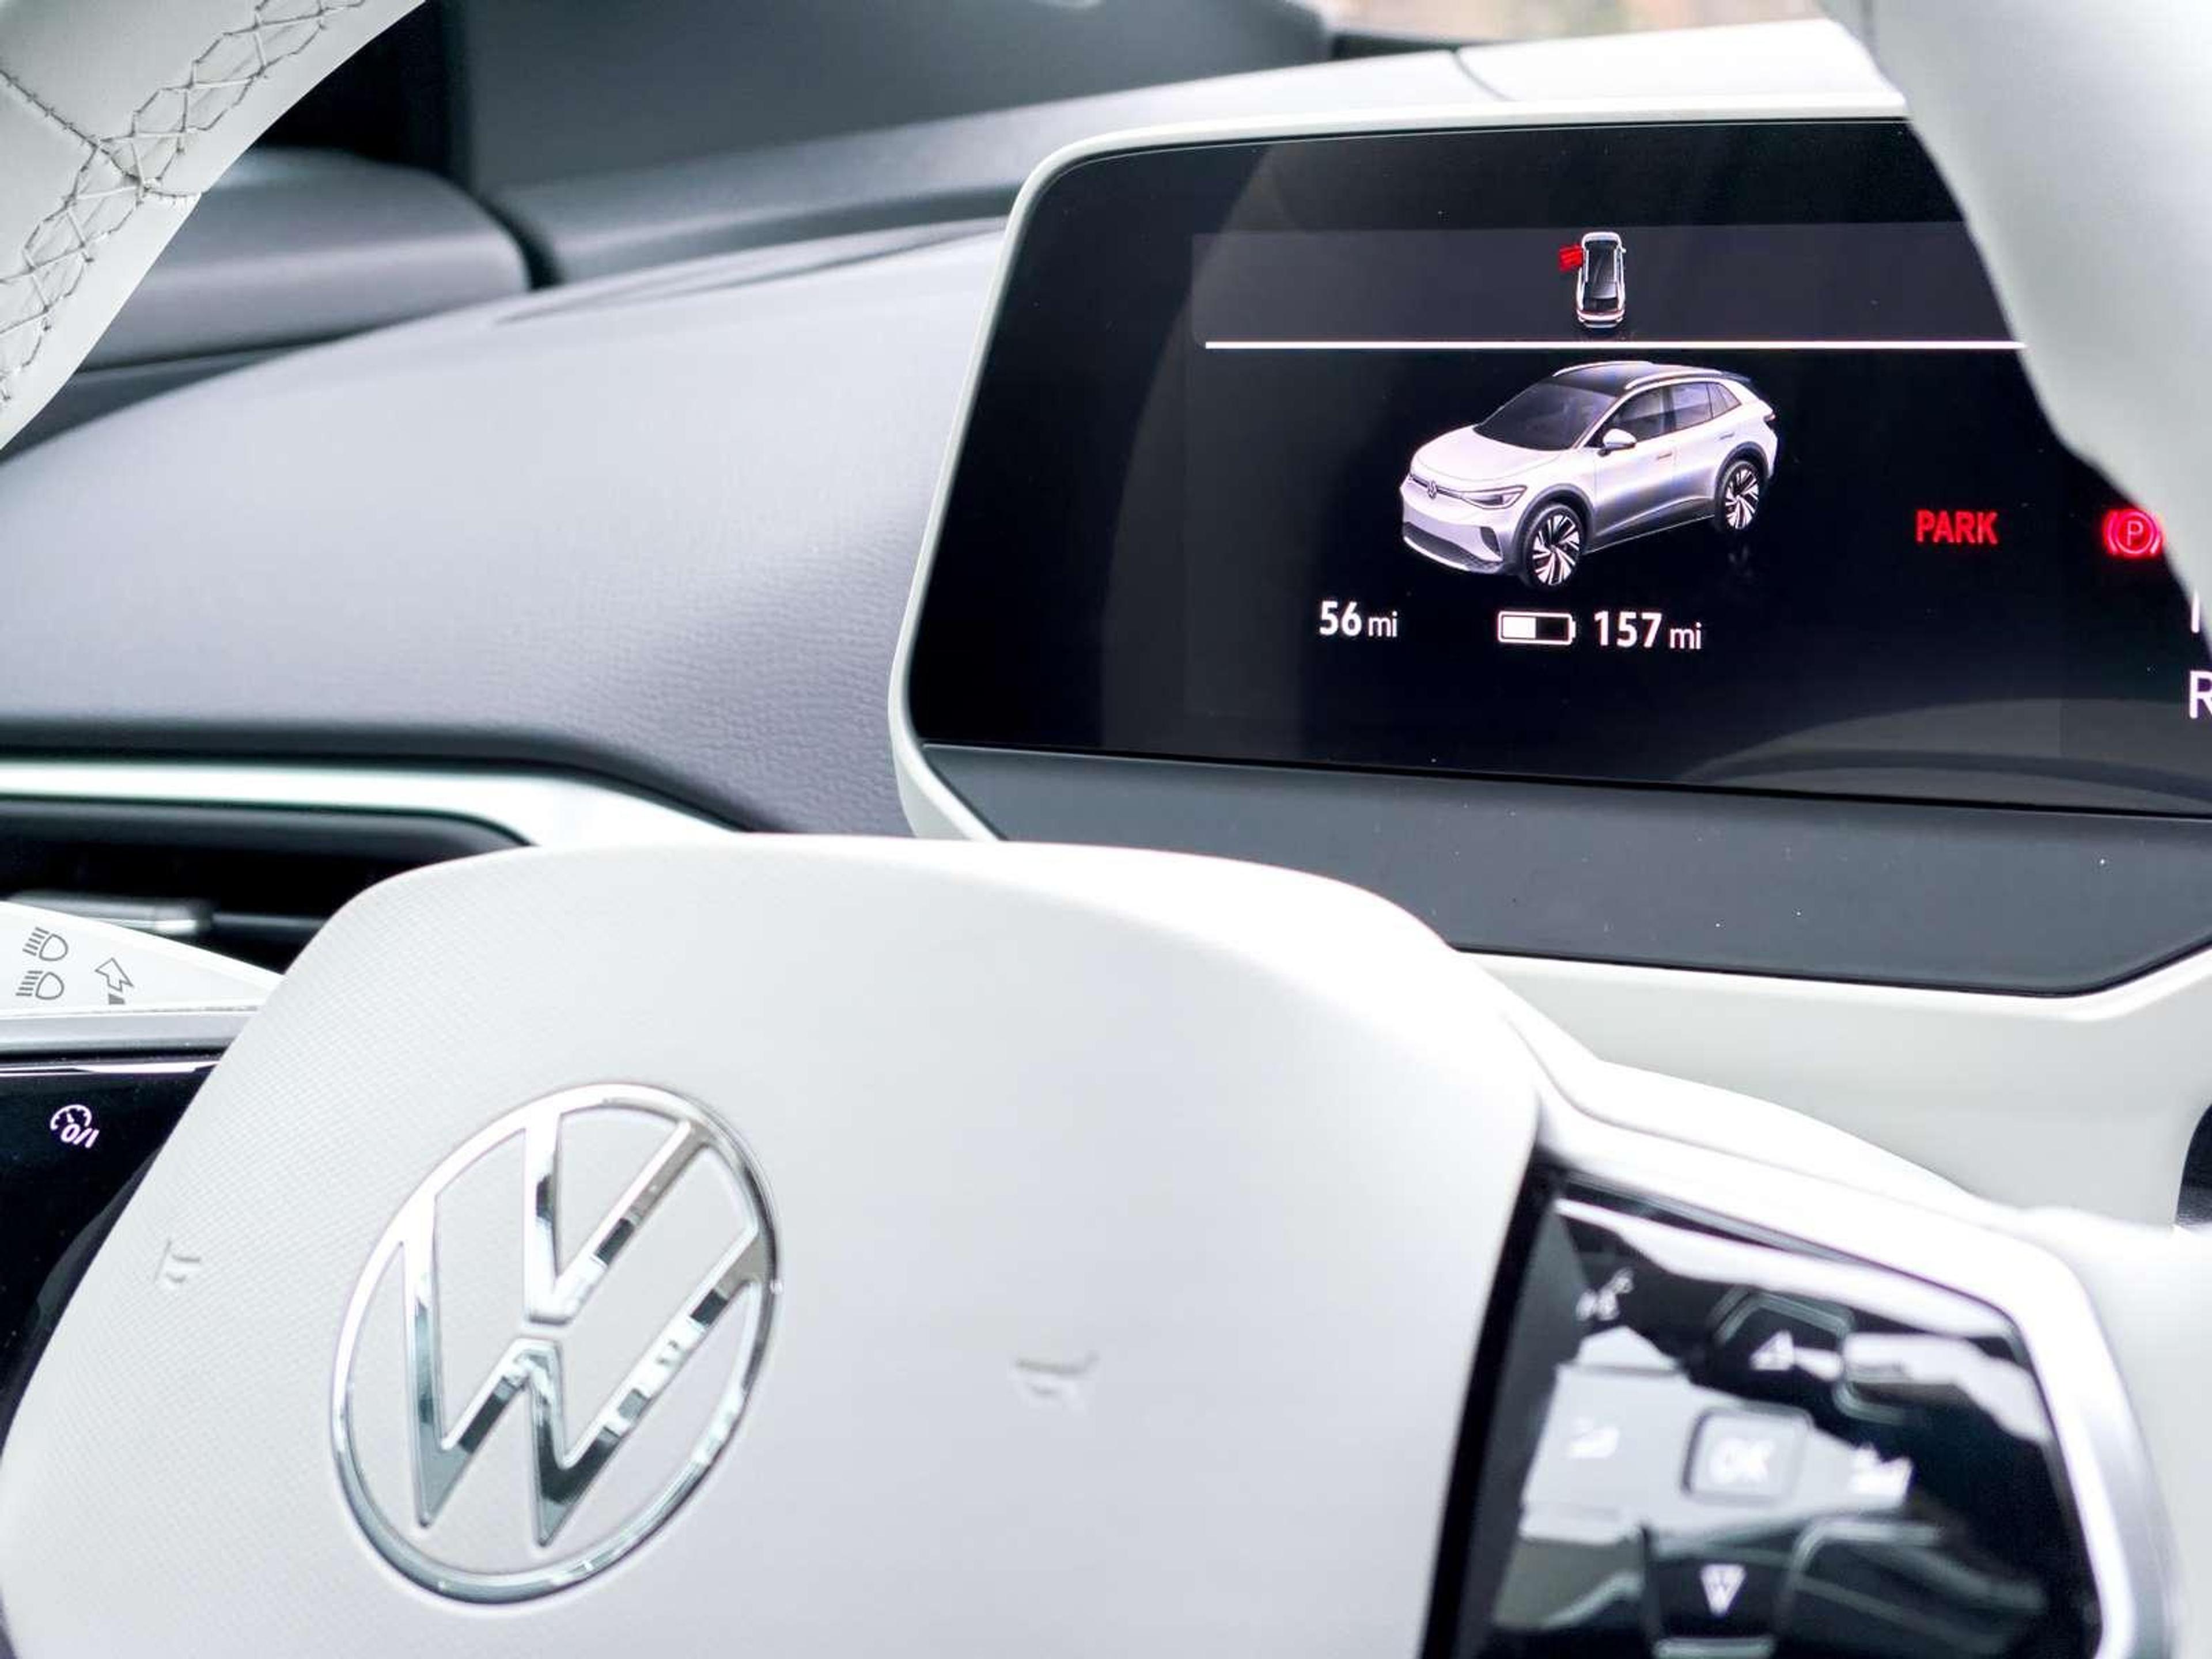 VW electric car dasboard range